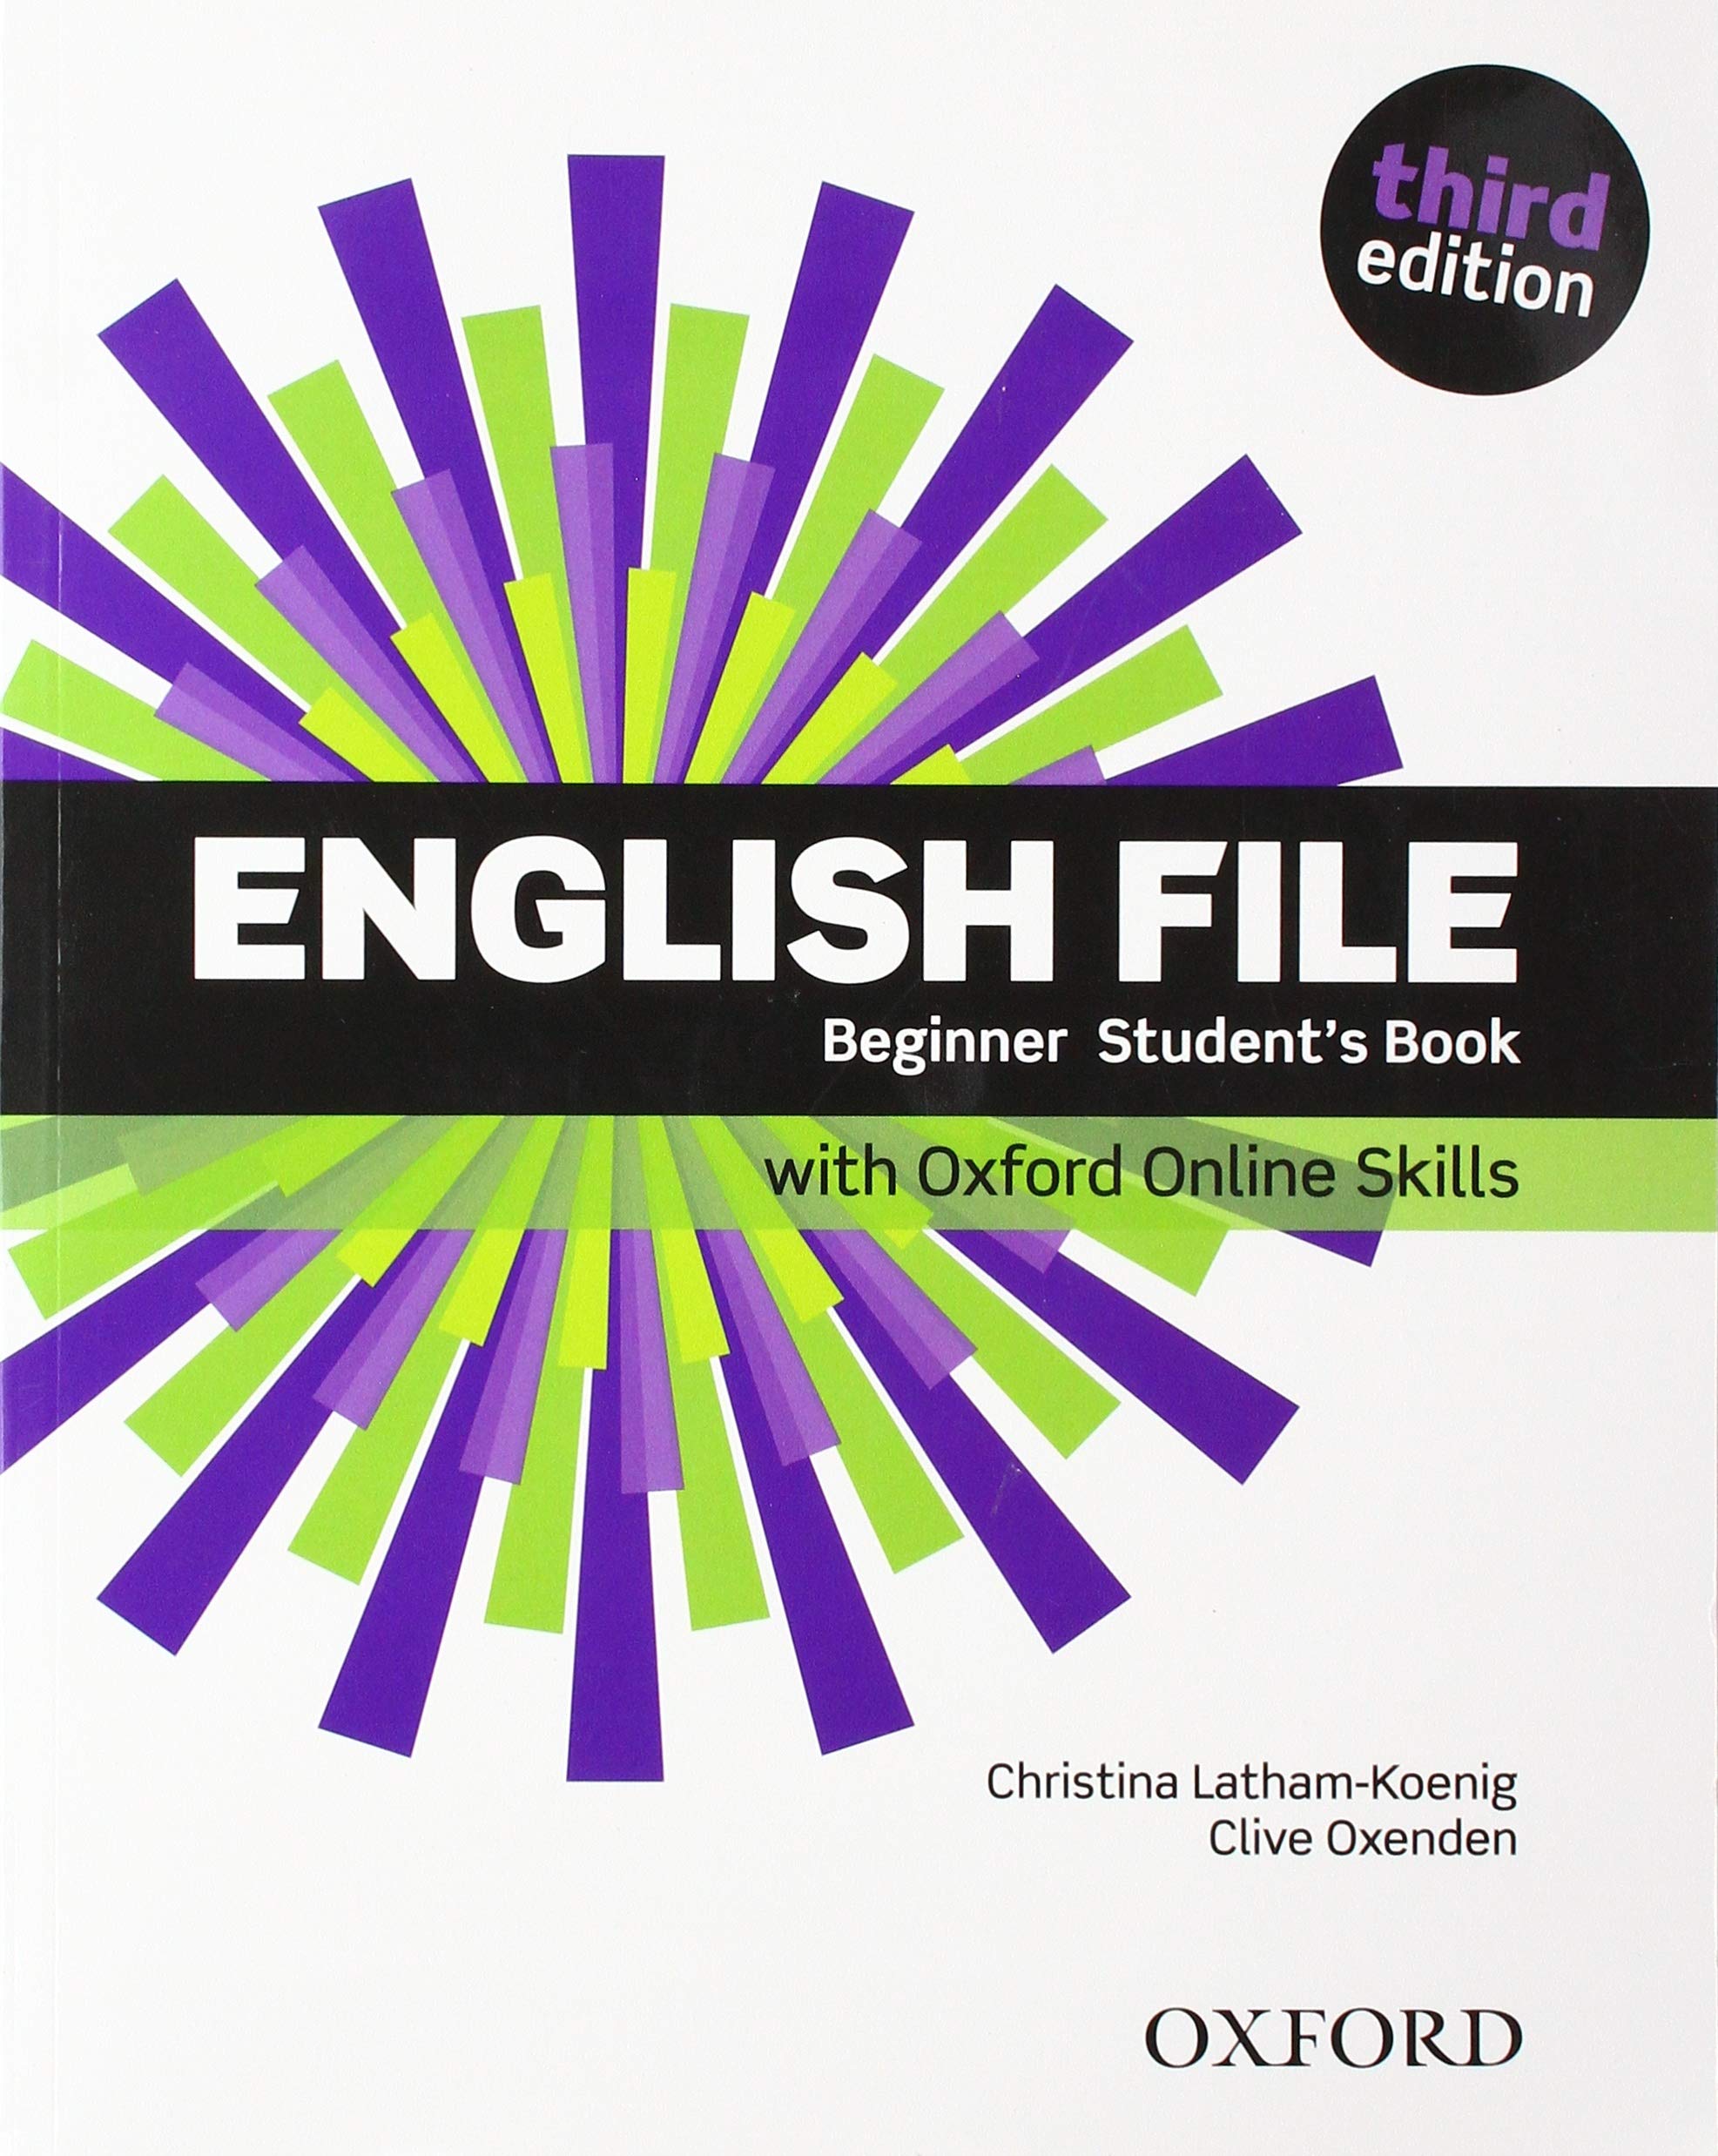 ENGLISH FILE BEGINNER 3rd ED Student's Book + Online Skills Pack